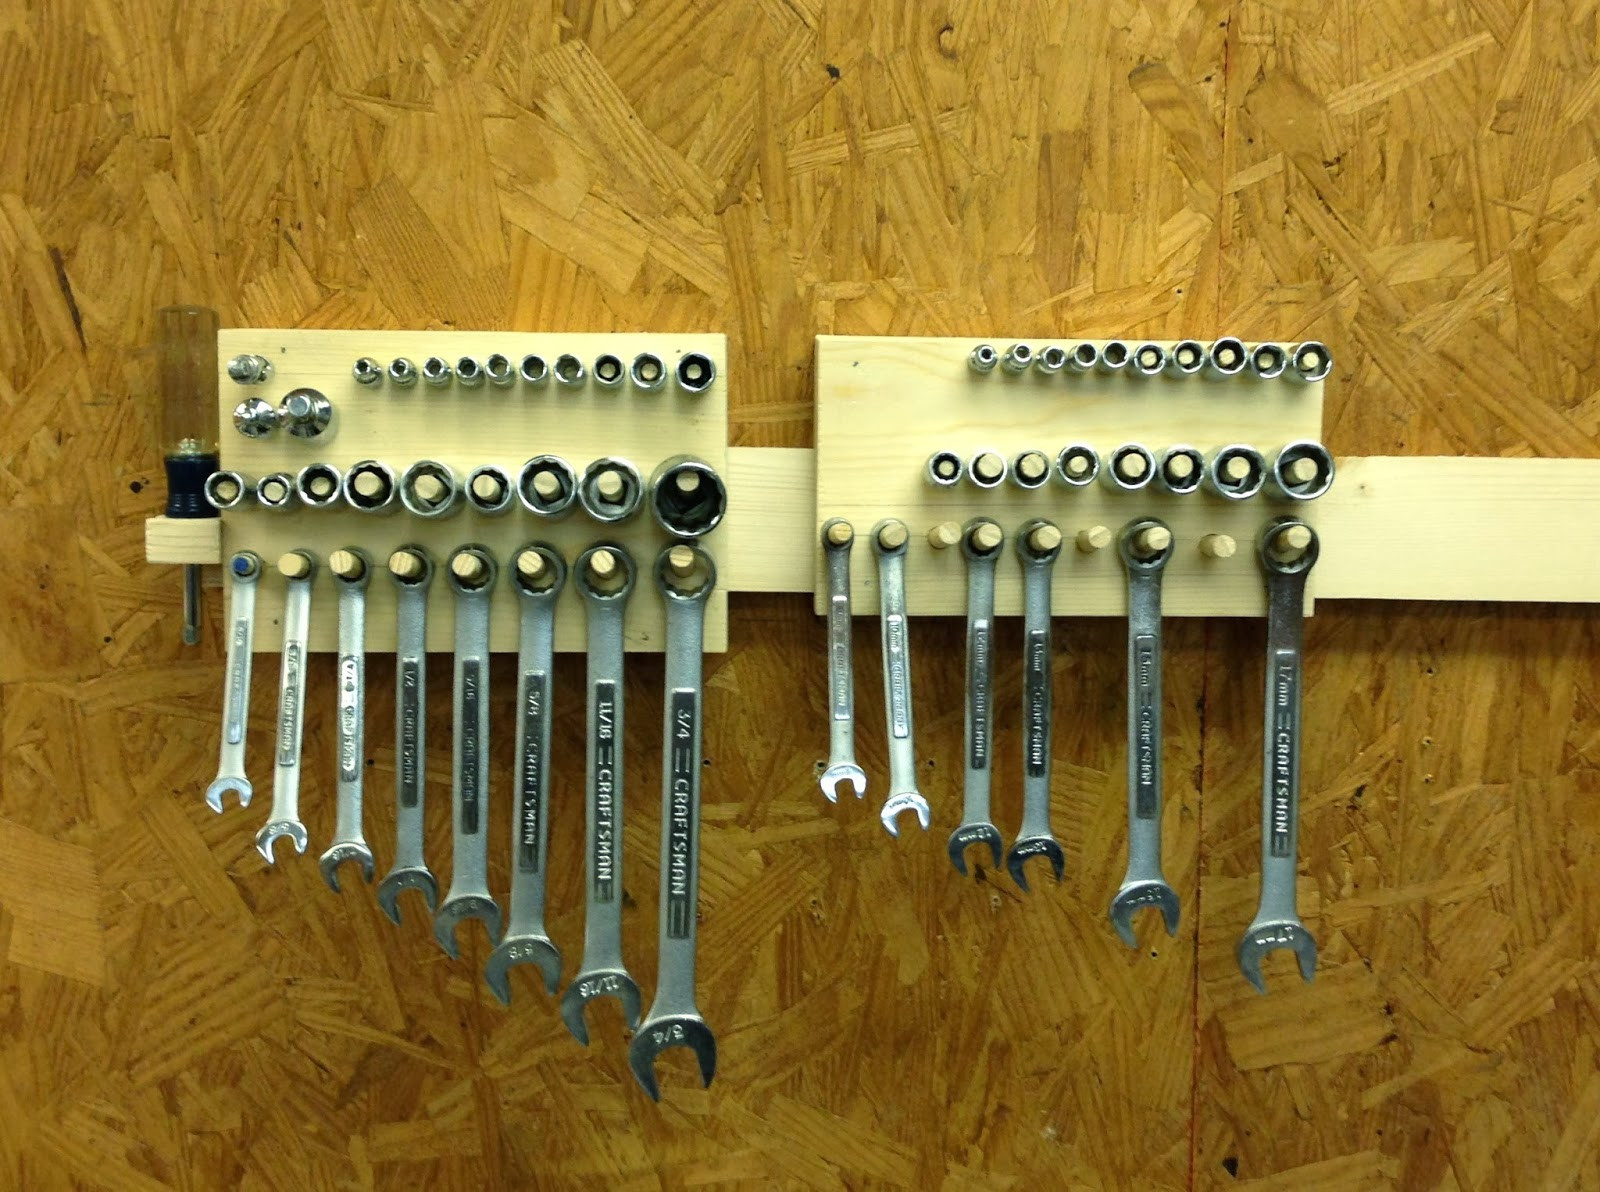 DIY Tool Organizer Ideas
 Wilker Do s DIY Storage for Hand Tools